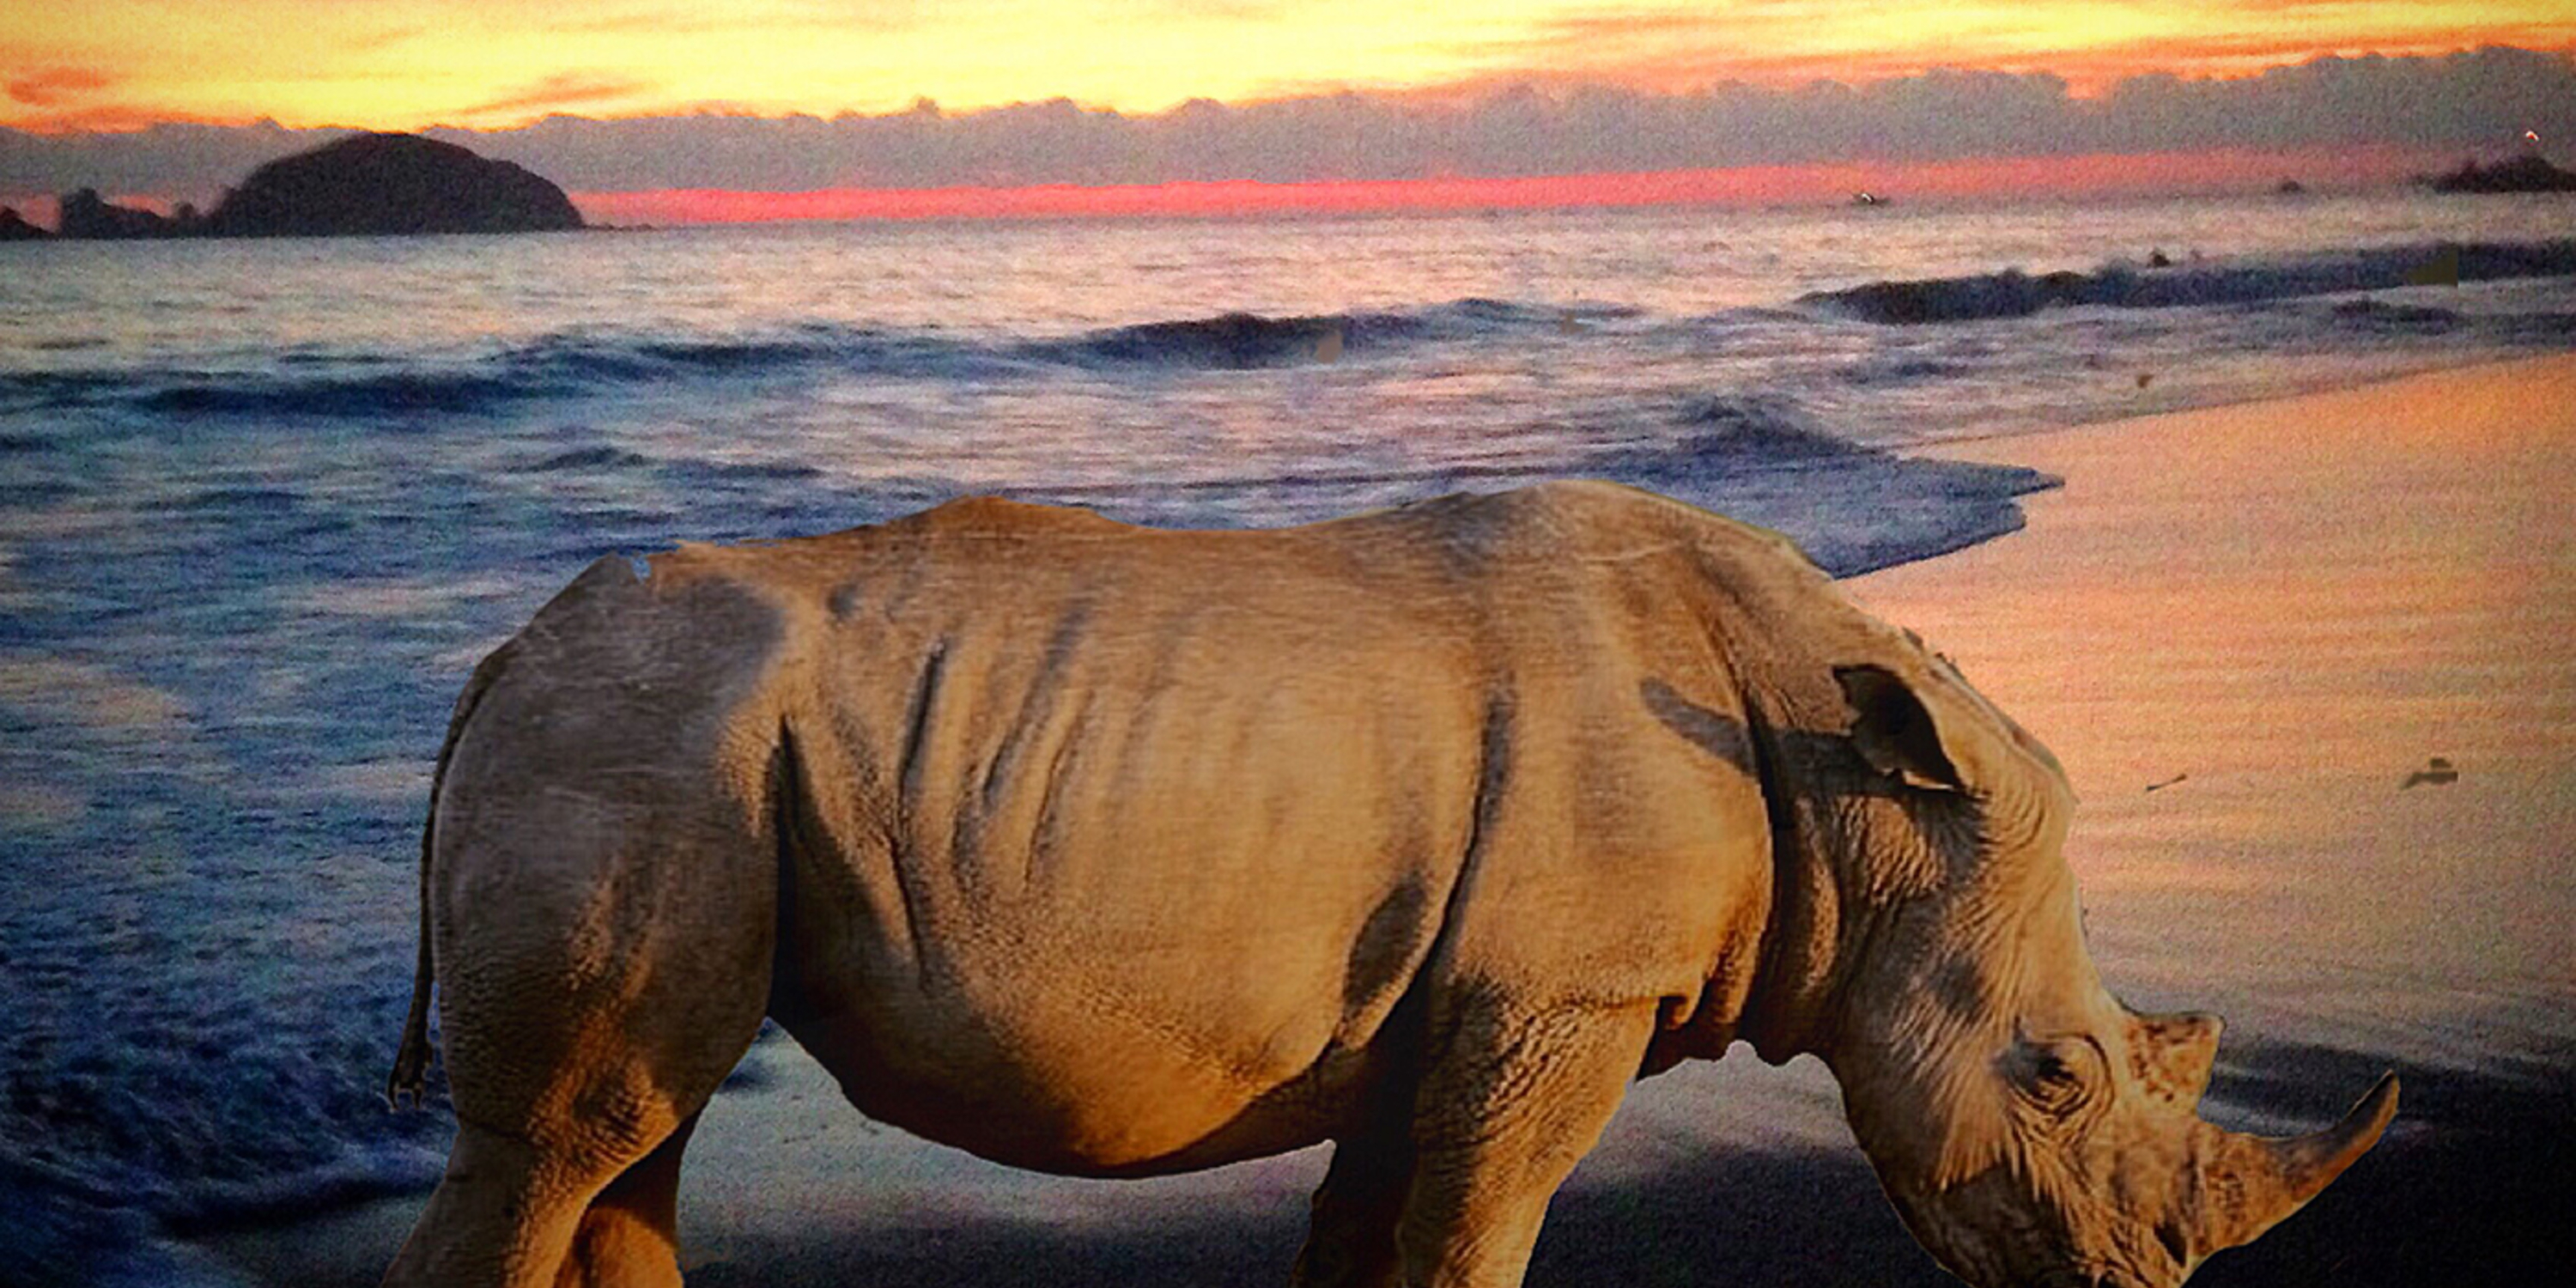 A rhino standing on the beach